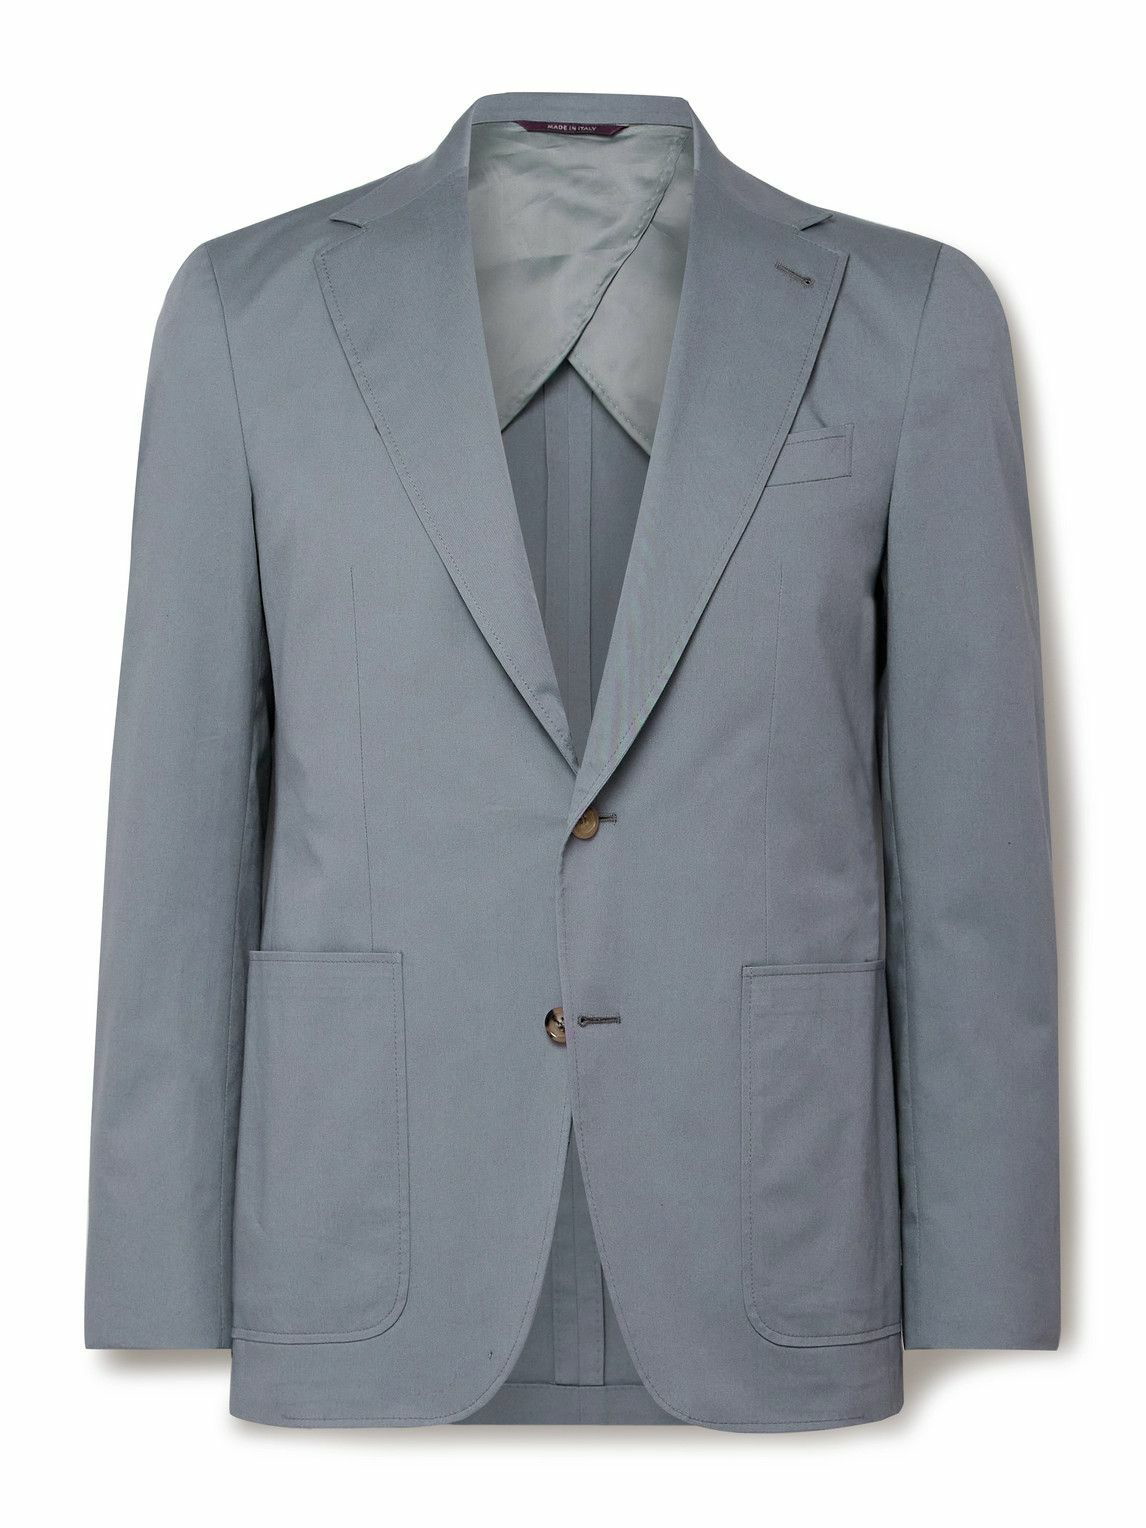 Canali - Kei Unstructured Cotton-Blend Suit Jacket - Blue Canali